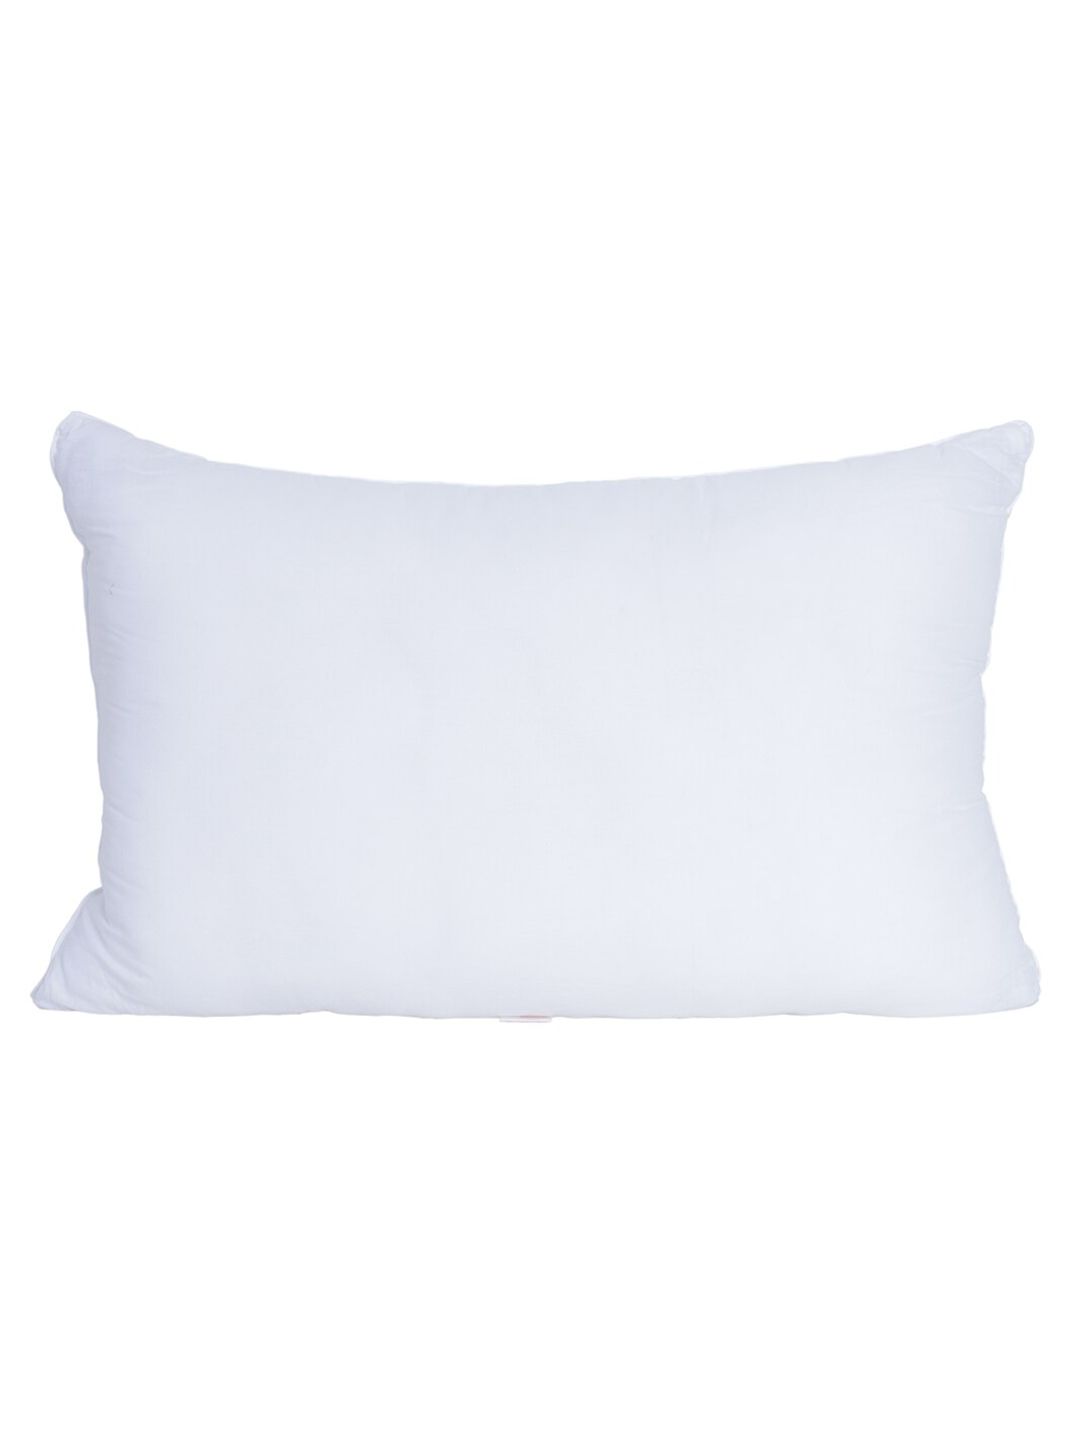 MASPAR White Solid Cotton Pillows Price in India